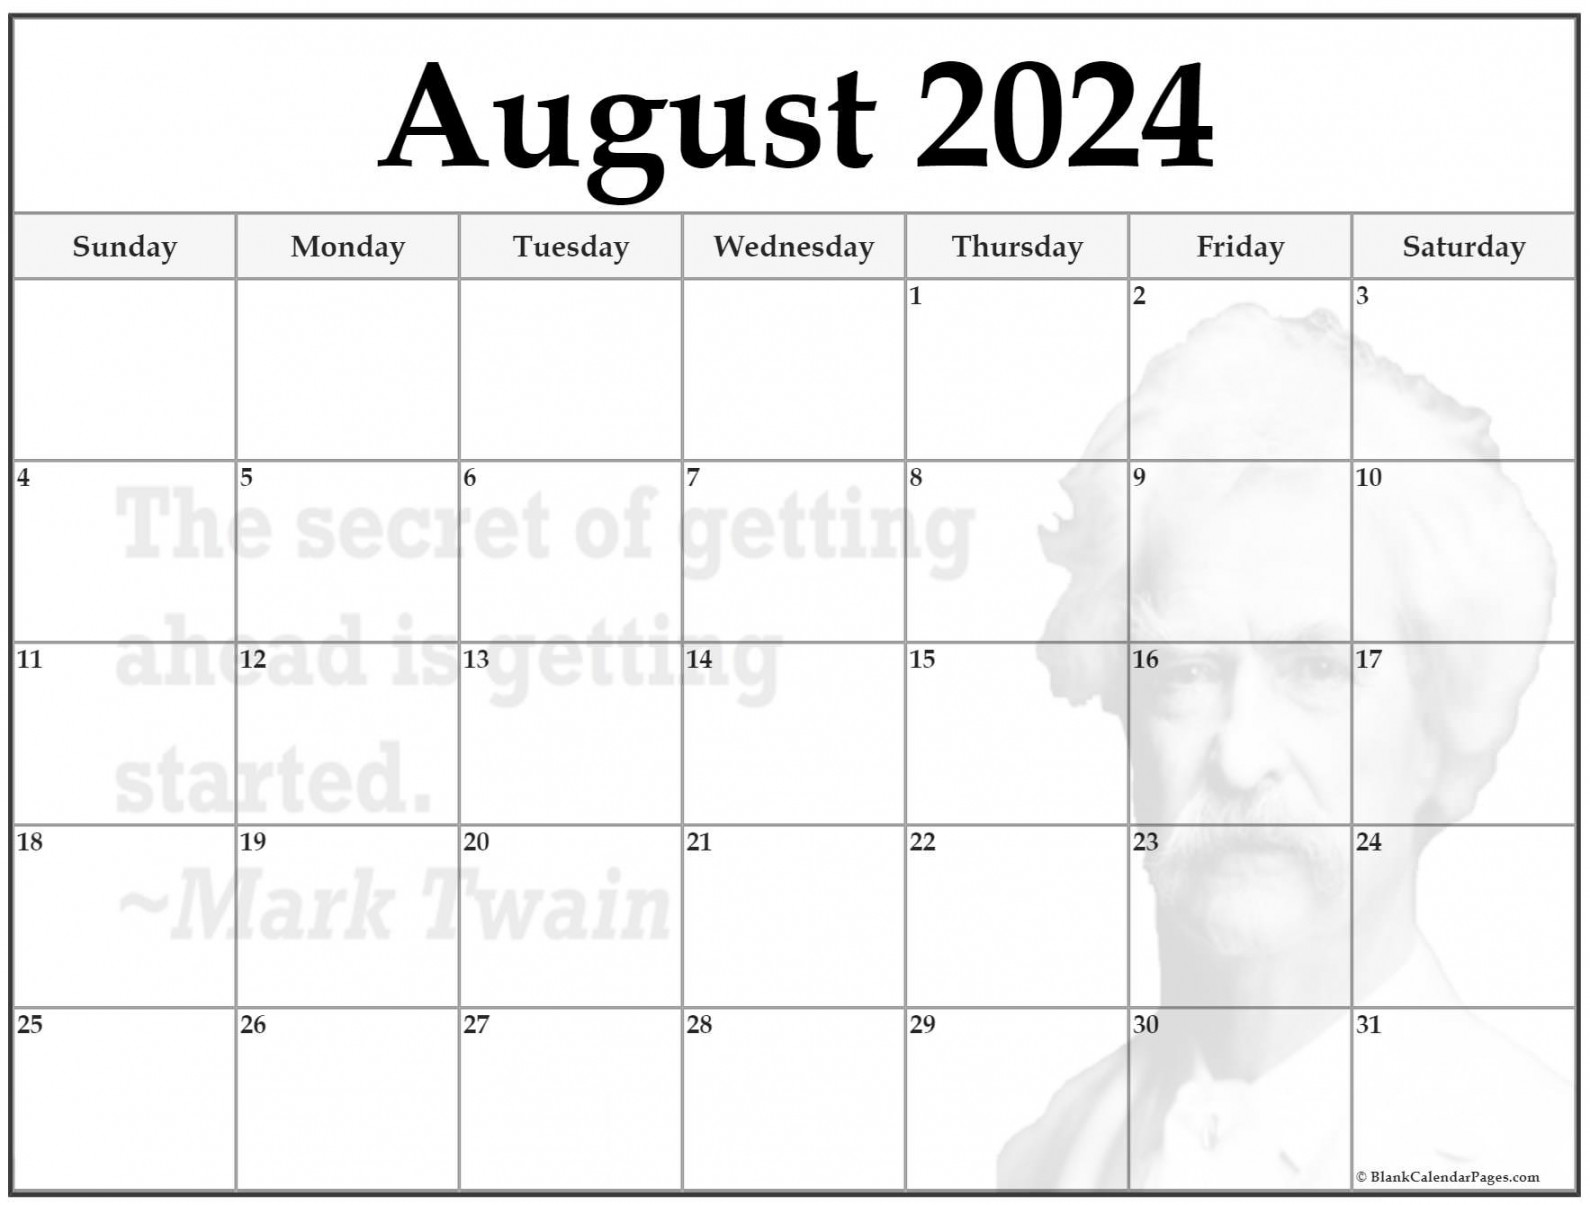 + August 20 quote calendars